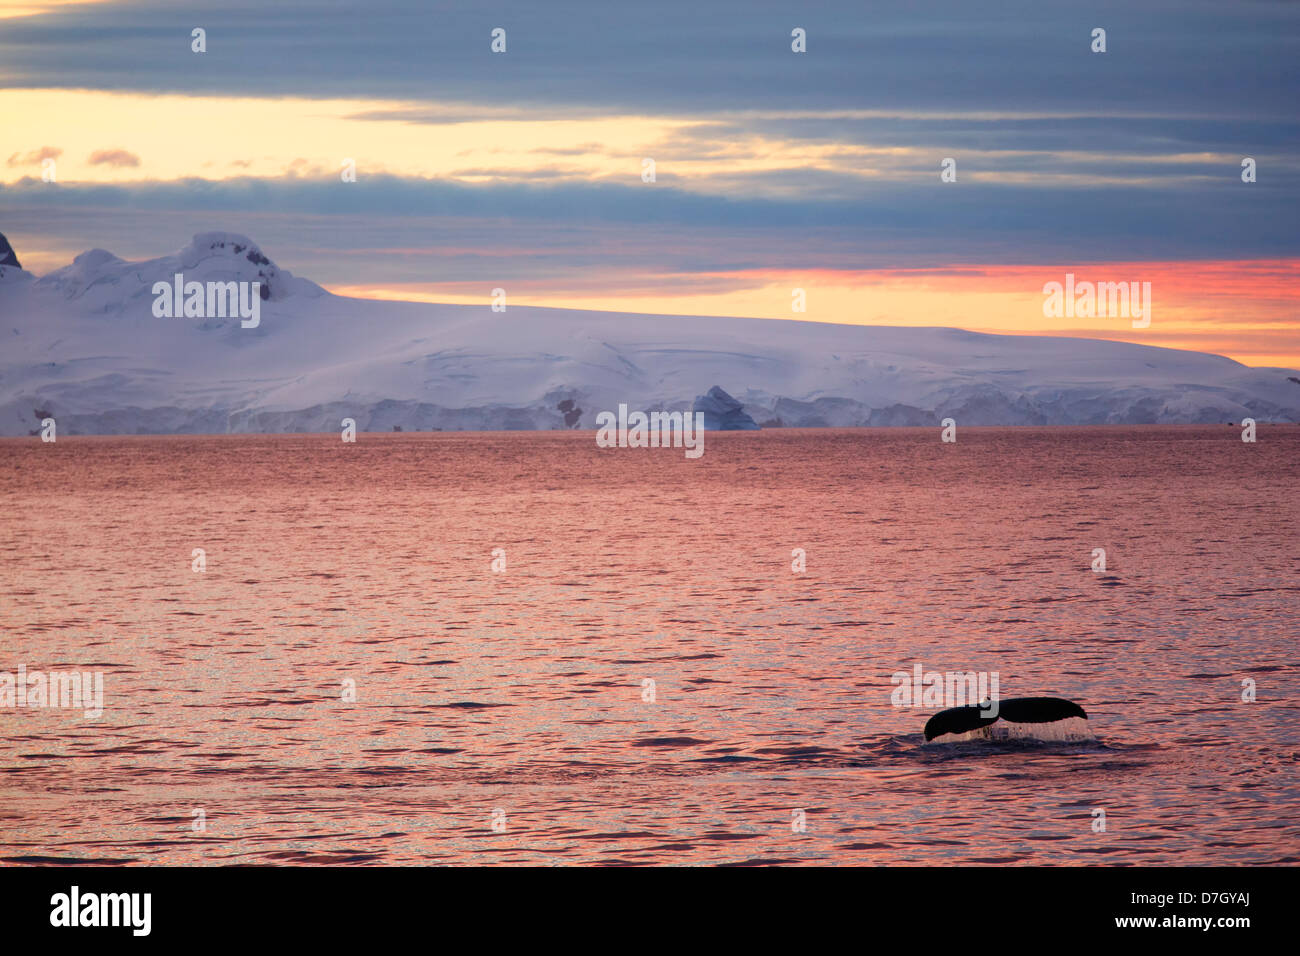 Humpback whale (Megaptera novaeangliae) at sunset / sunrise as we travel below the Antarctic Circle, Antarctica.  Stock Photo